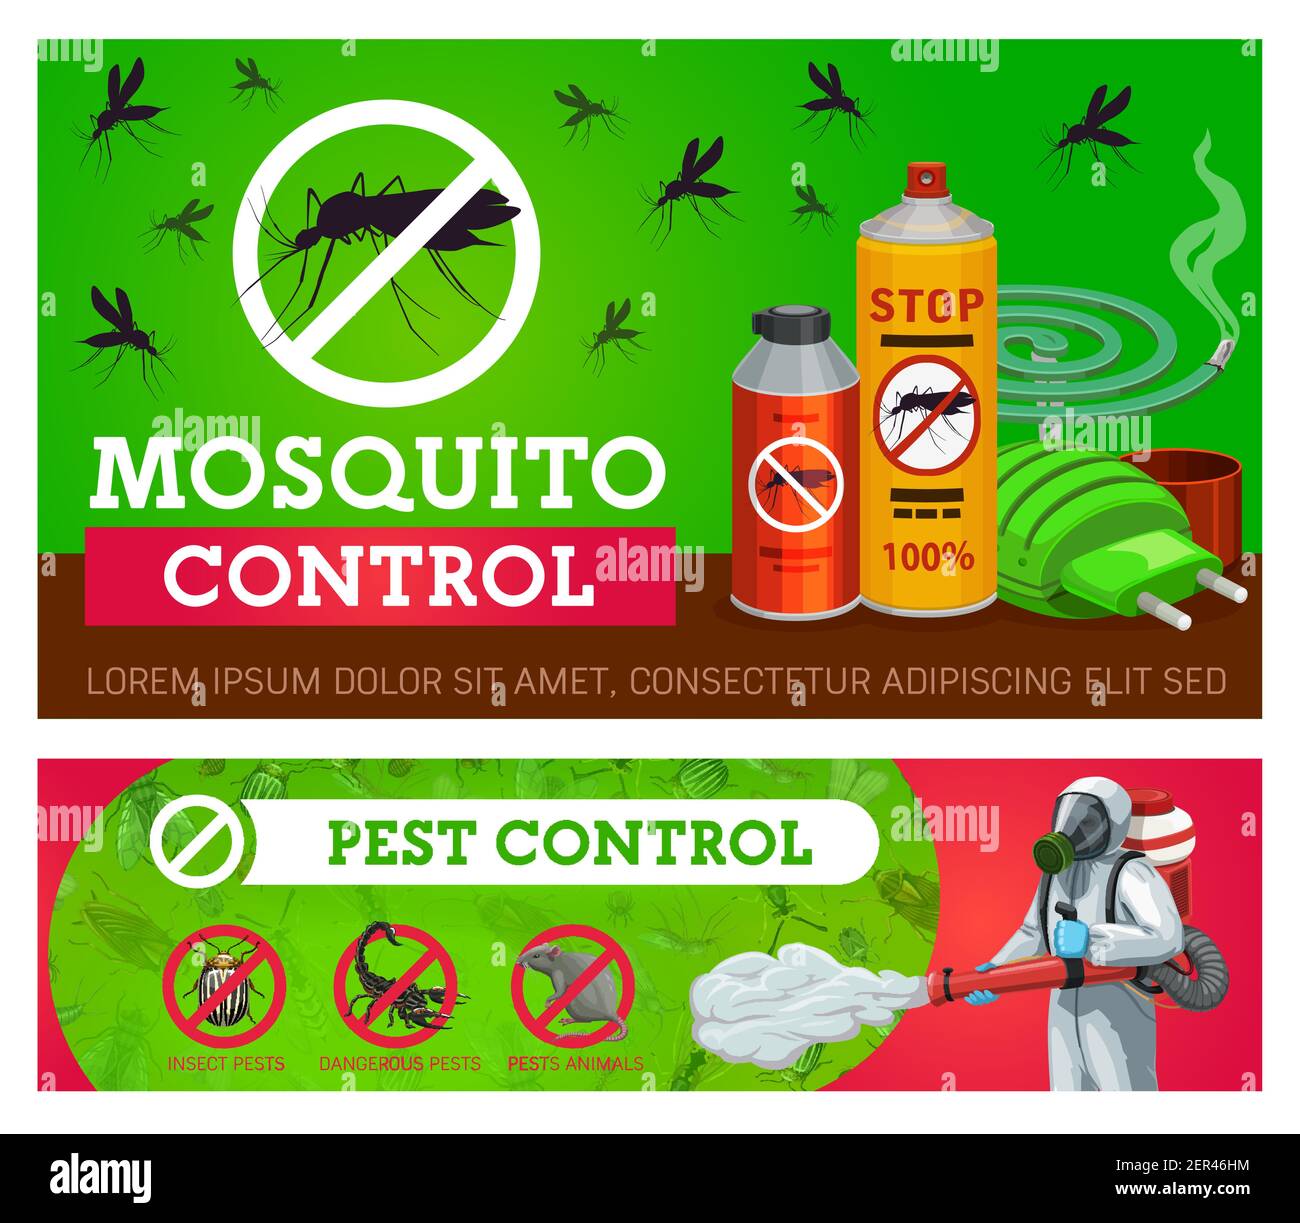 Control de plagas, pancartas de vectores de disinsection de mosquitos con repelentes y exterminador con fogger frío. Desinsectación de insectos caseros. Fumigación de t Imagen Vector de stock - Alamy